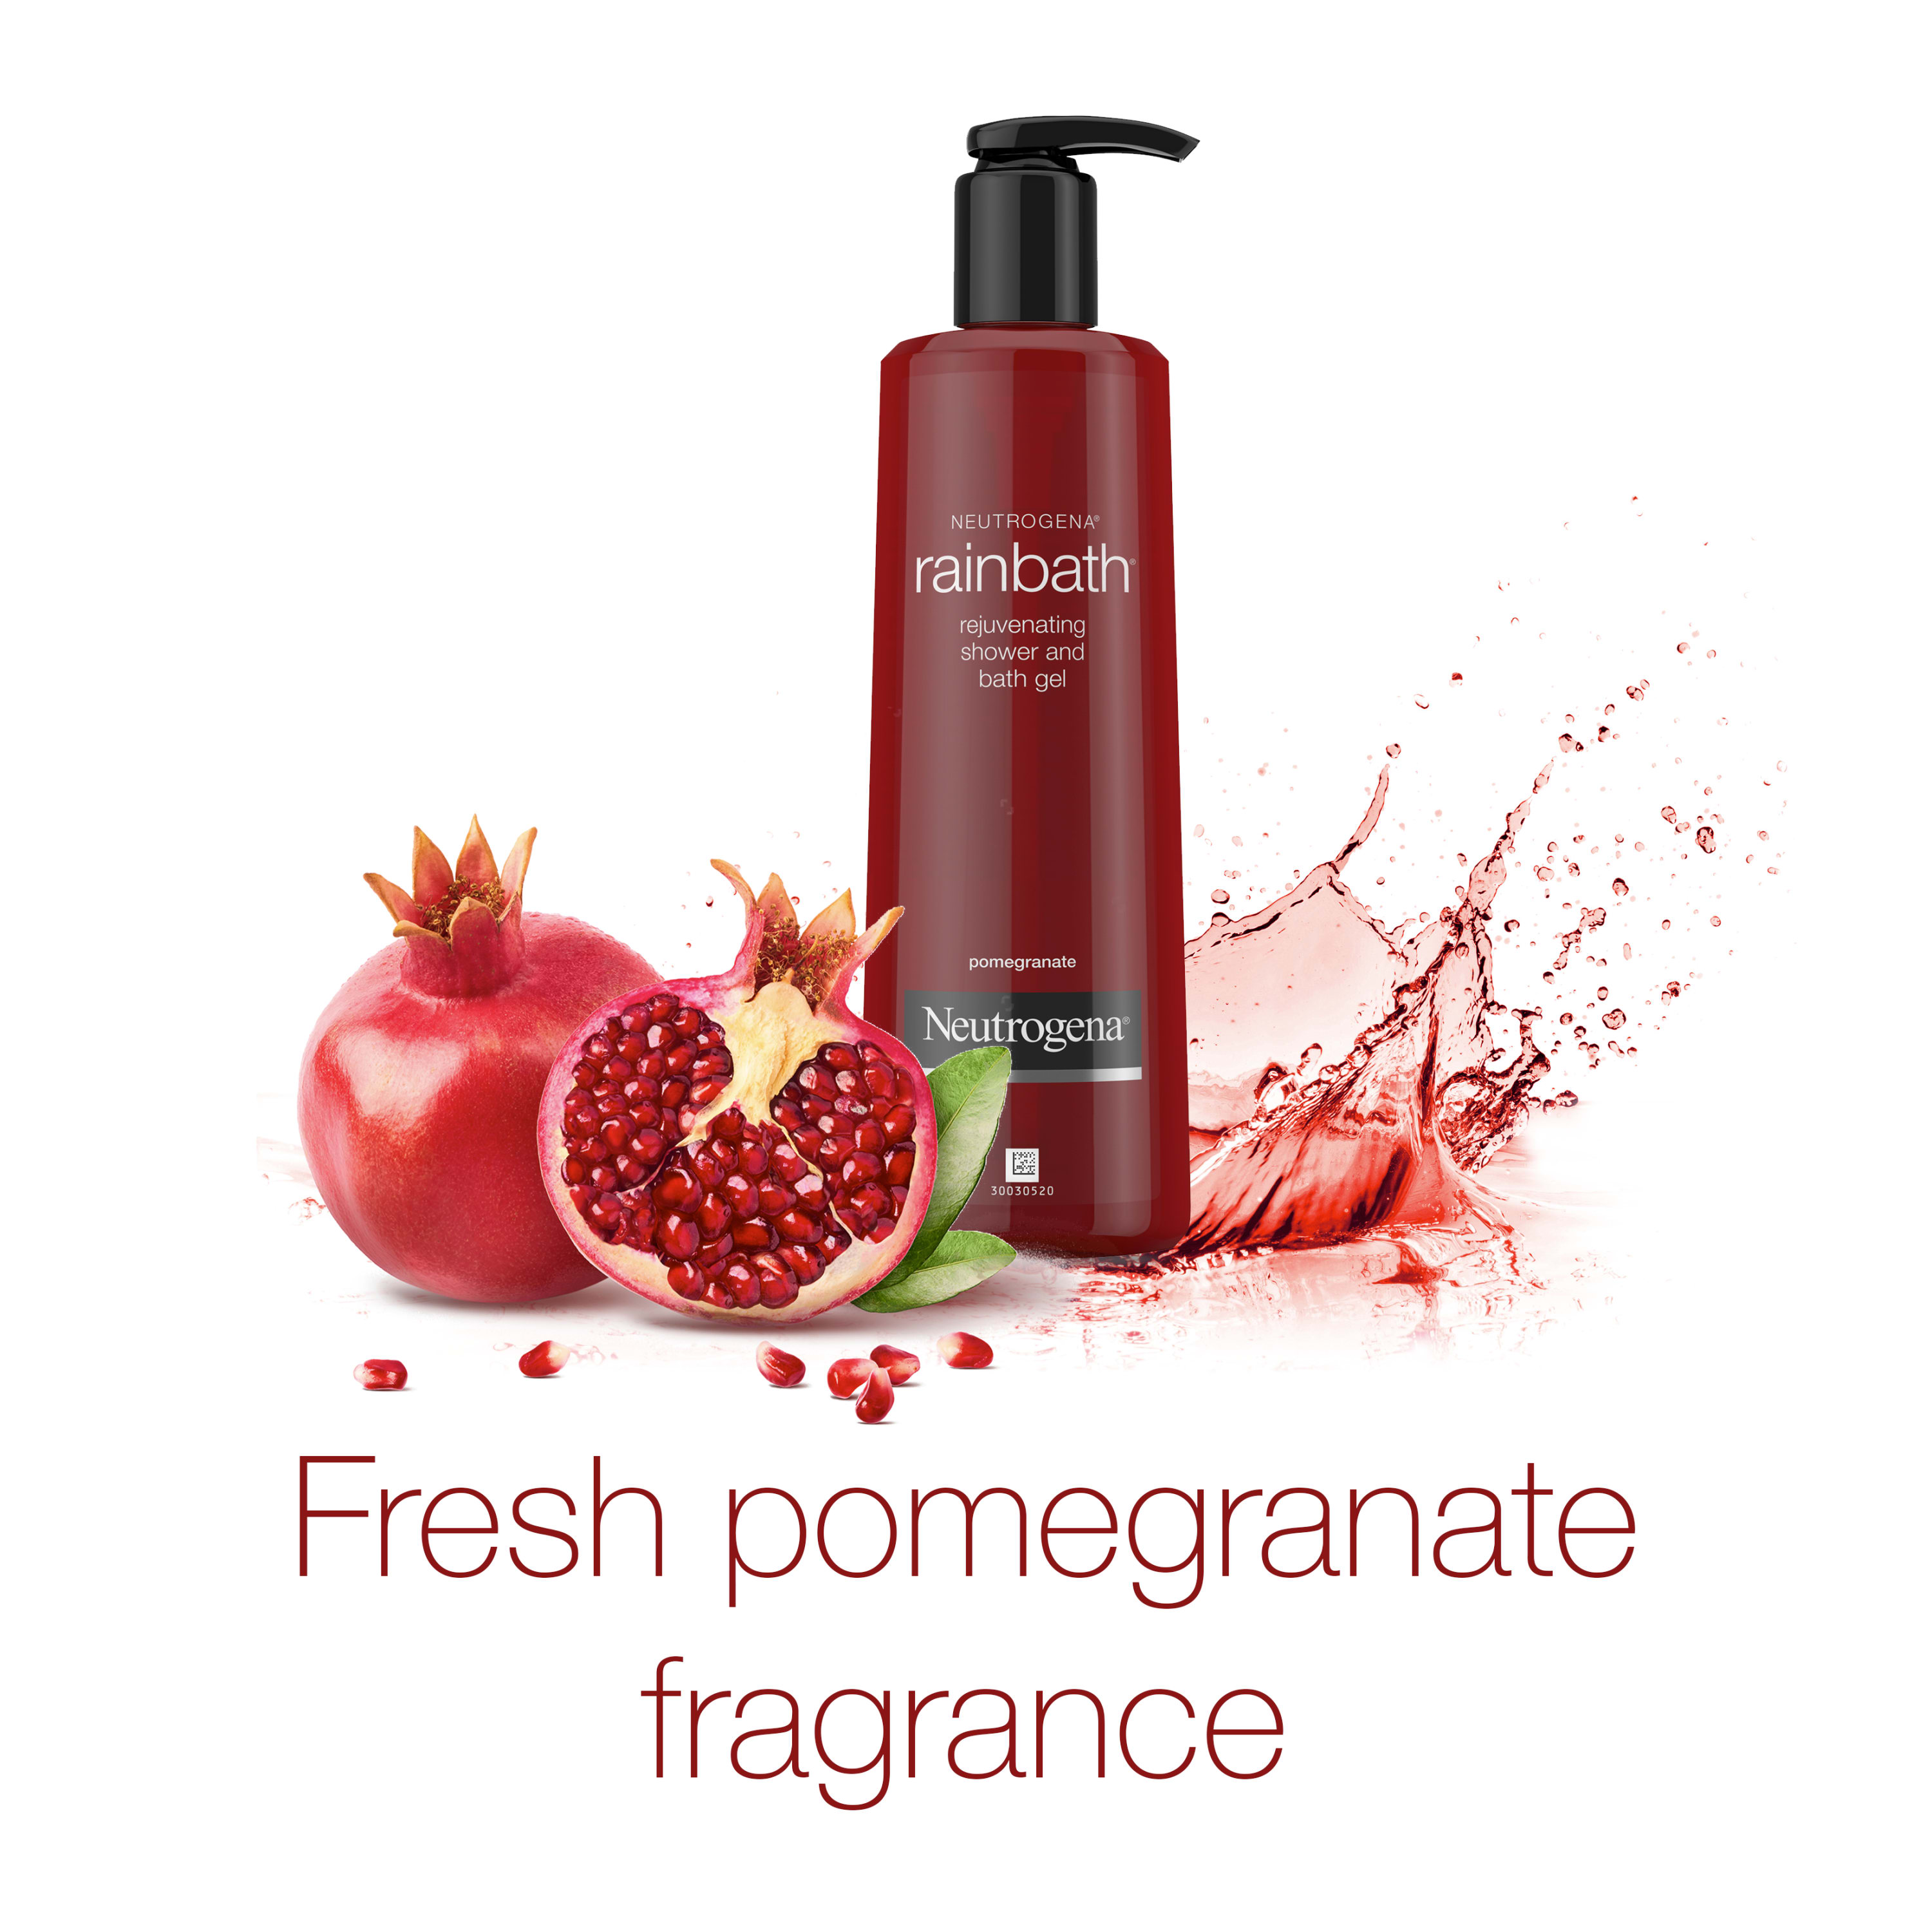 Neutrogena Rainbath Rejuvenating Shower/Bath Gel, Pomegranate, 16 oz - image 4 of 16